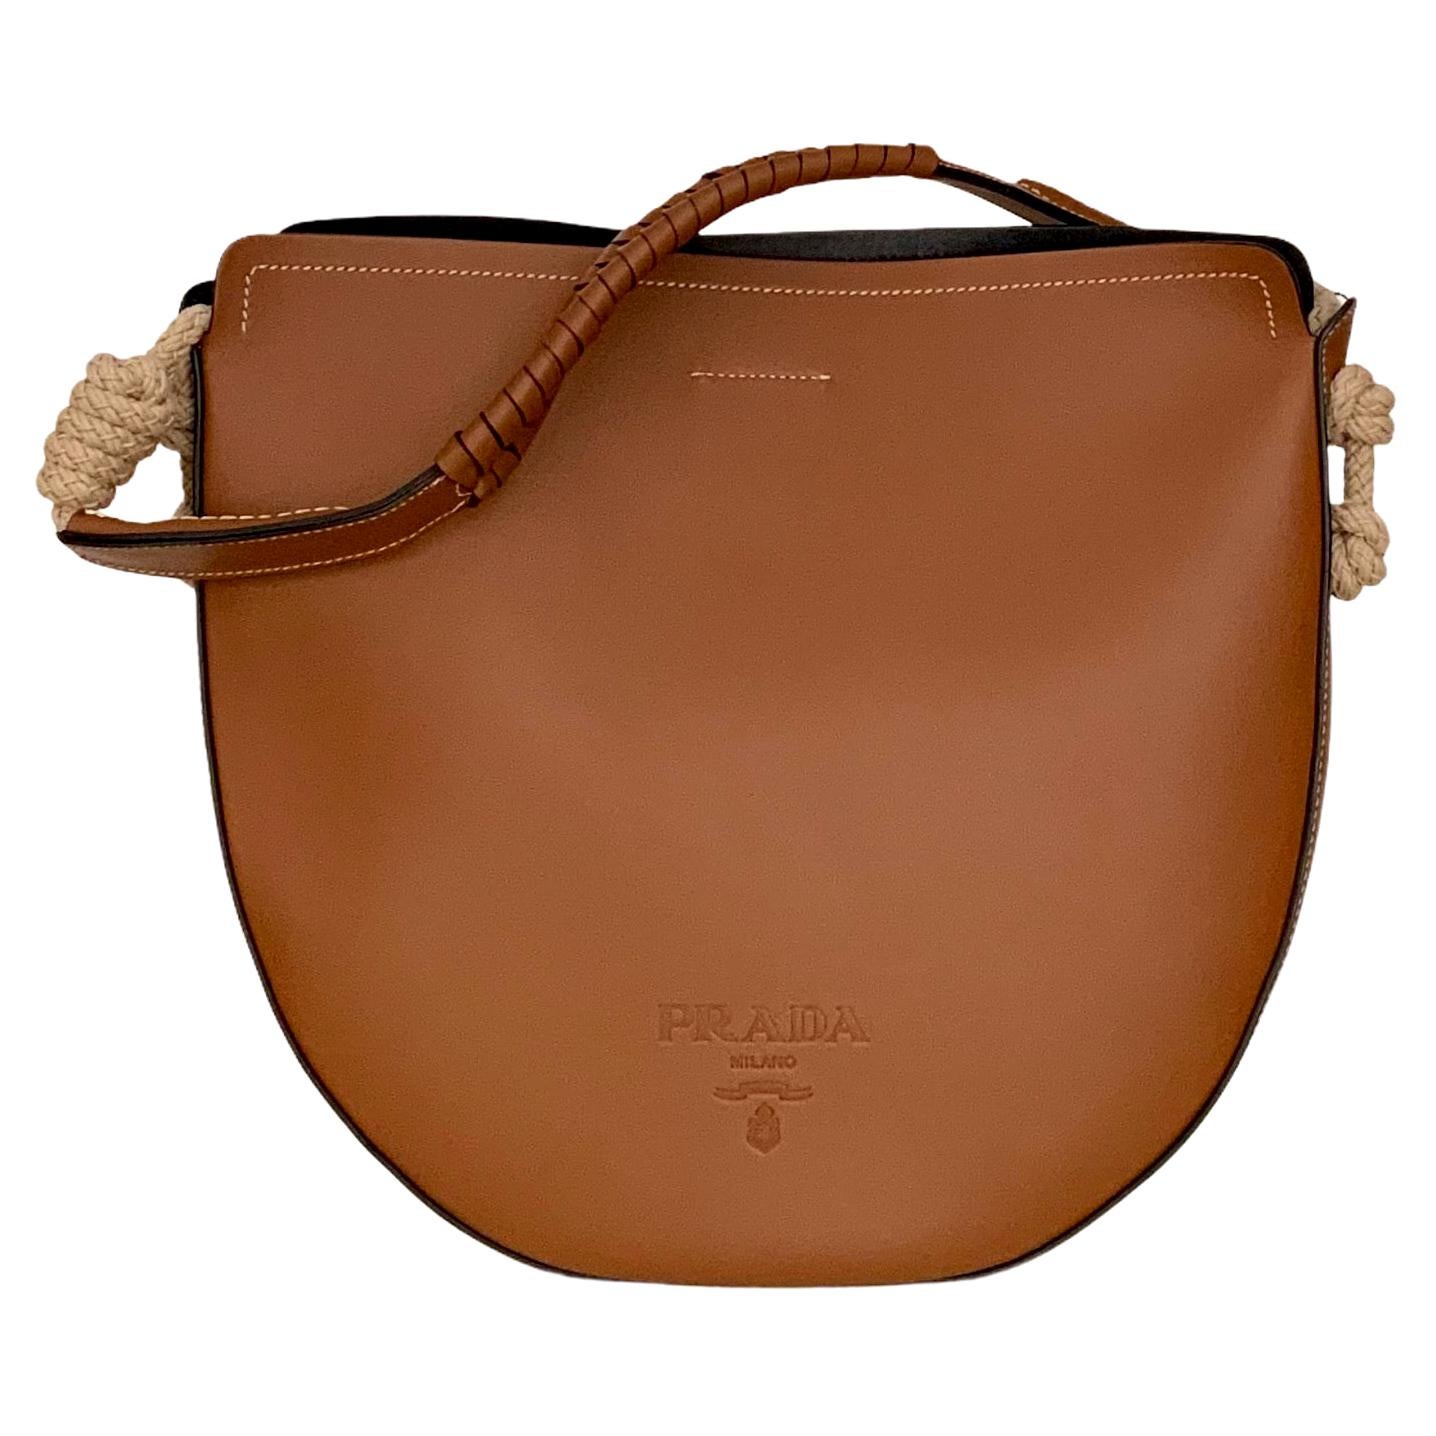 Prada Cognac Leather Bag with Cord Details